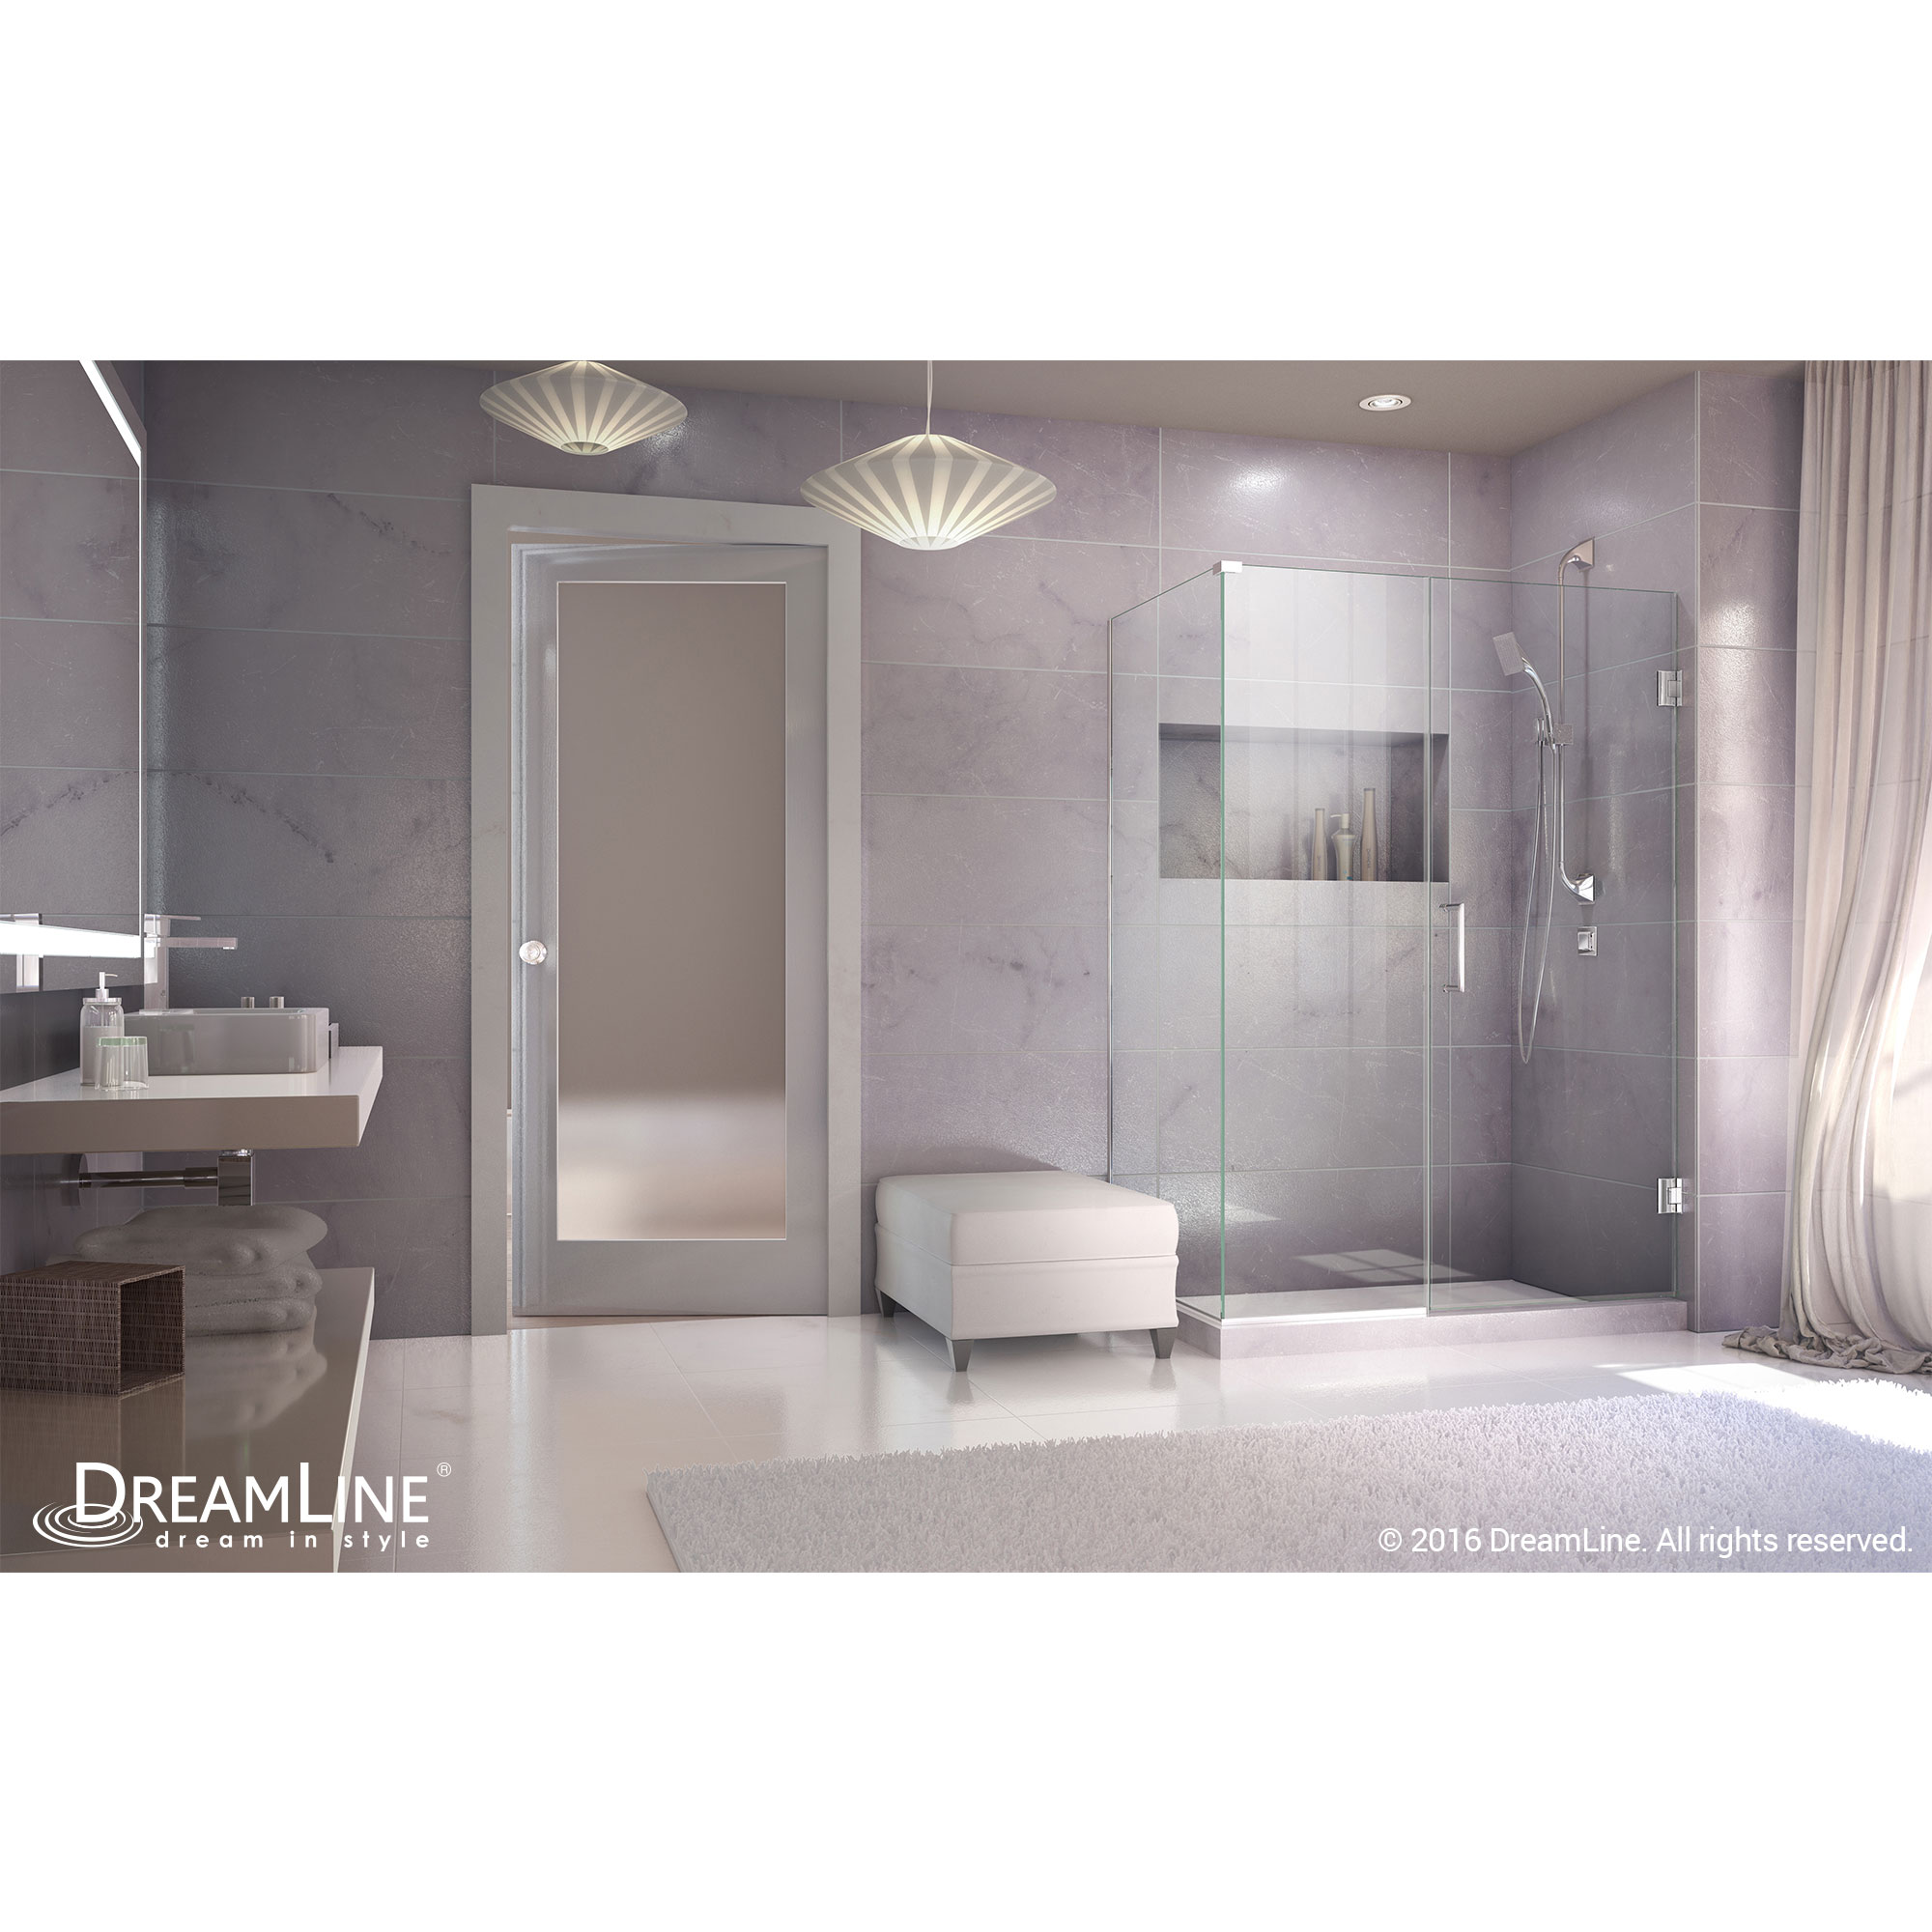 DreamLine SHEN-24385340-01 Unidoor Plus Hinged Shower Enclosure In Chrome Finish Hardware